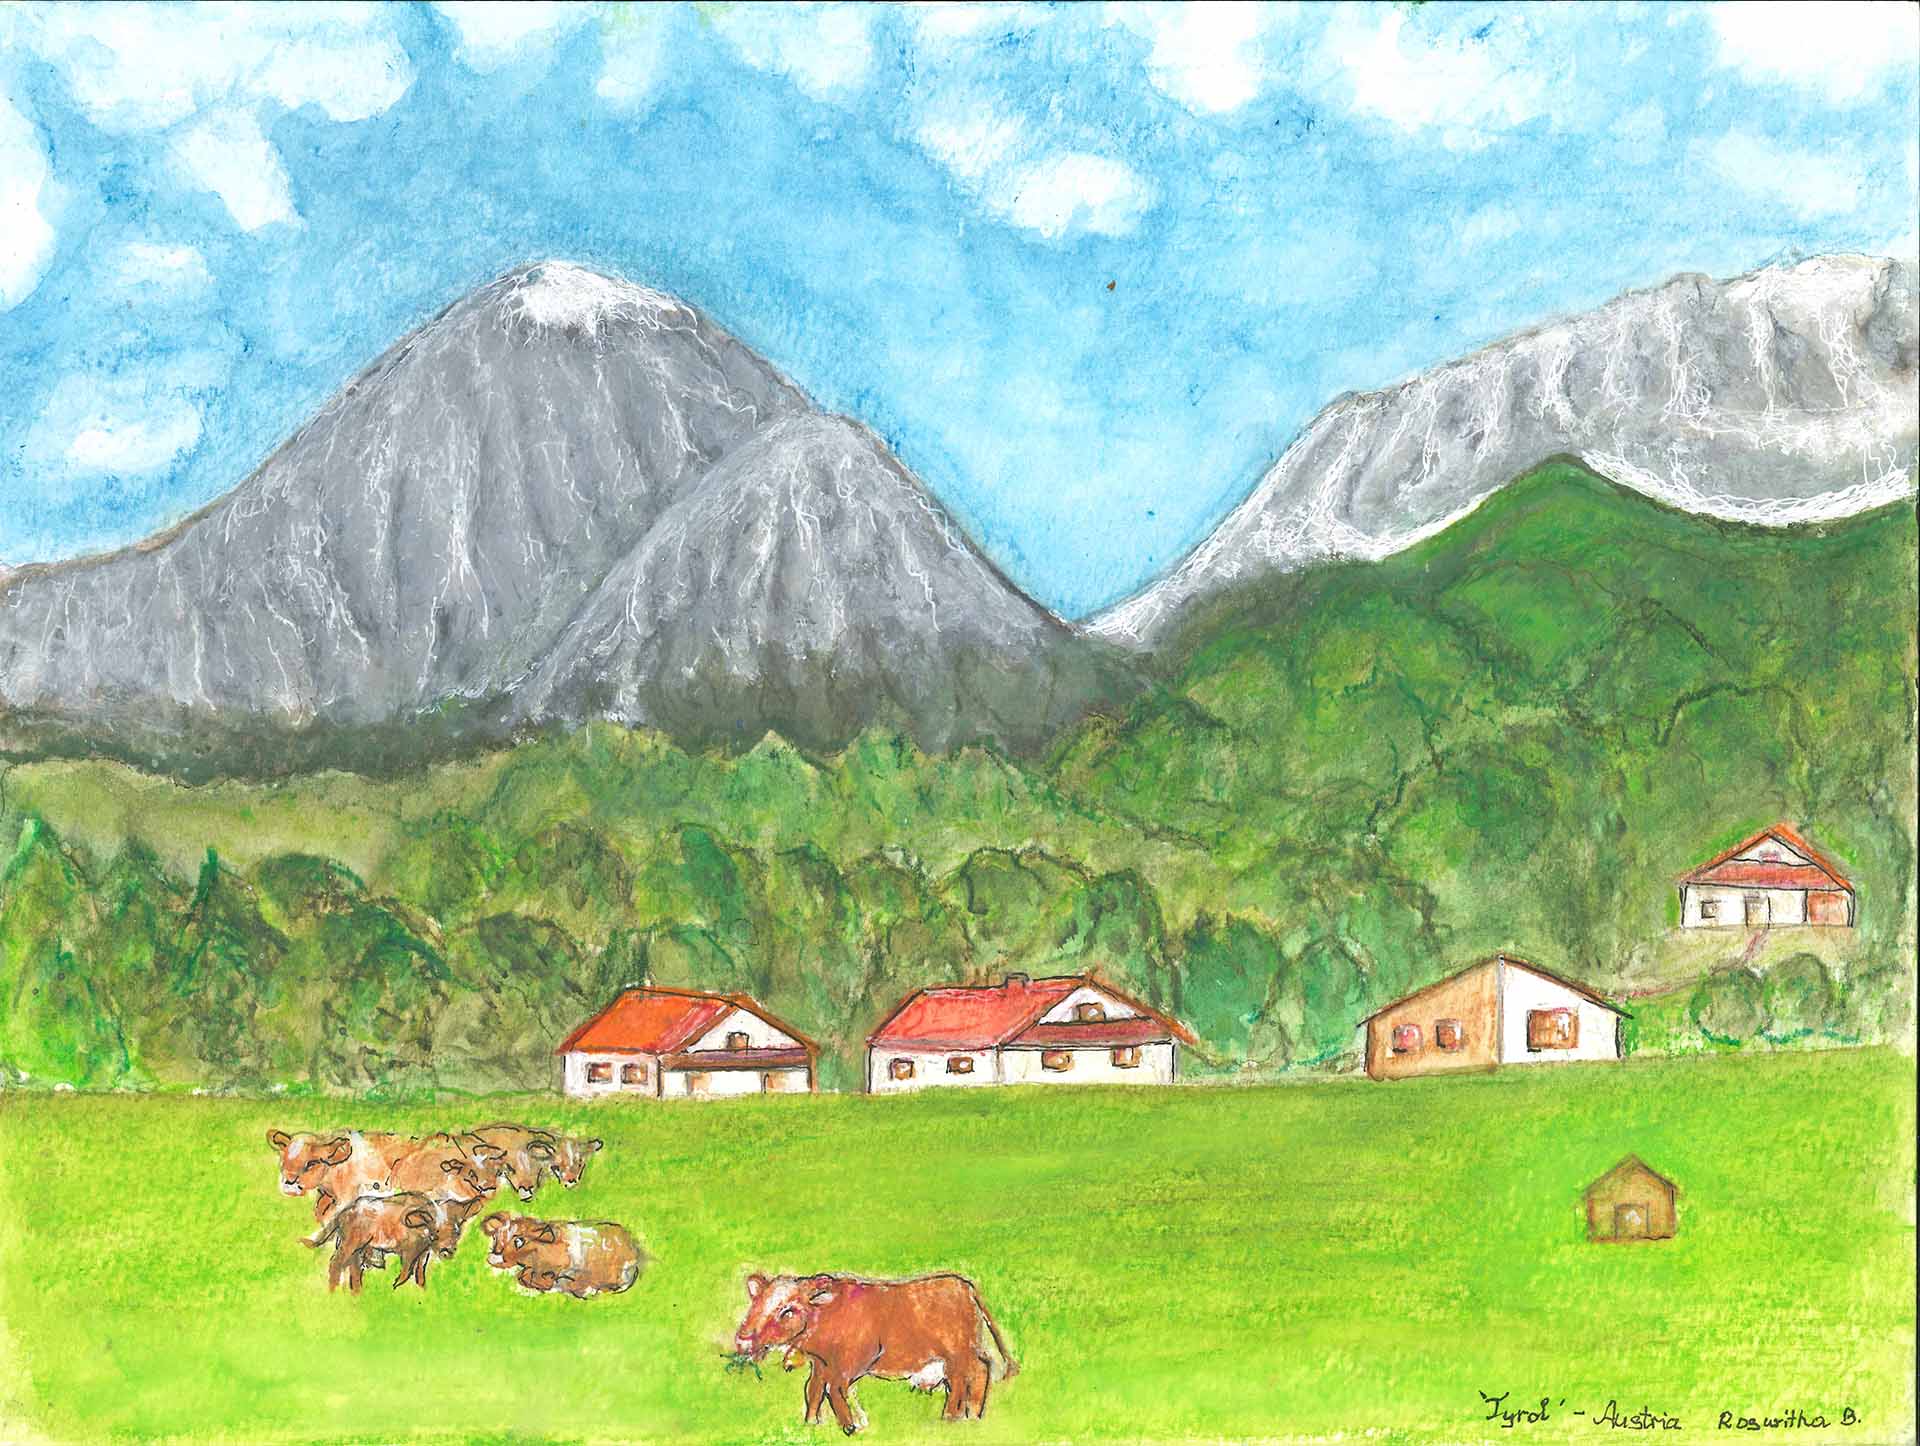 Tyrol Austria Illustration